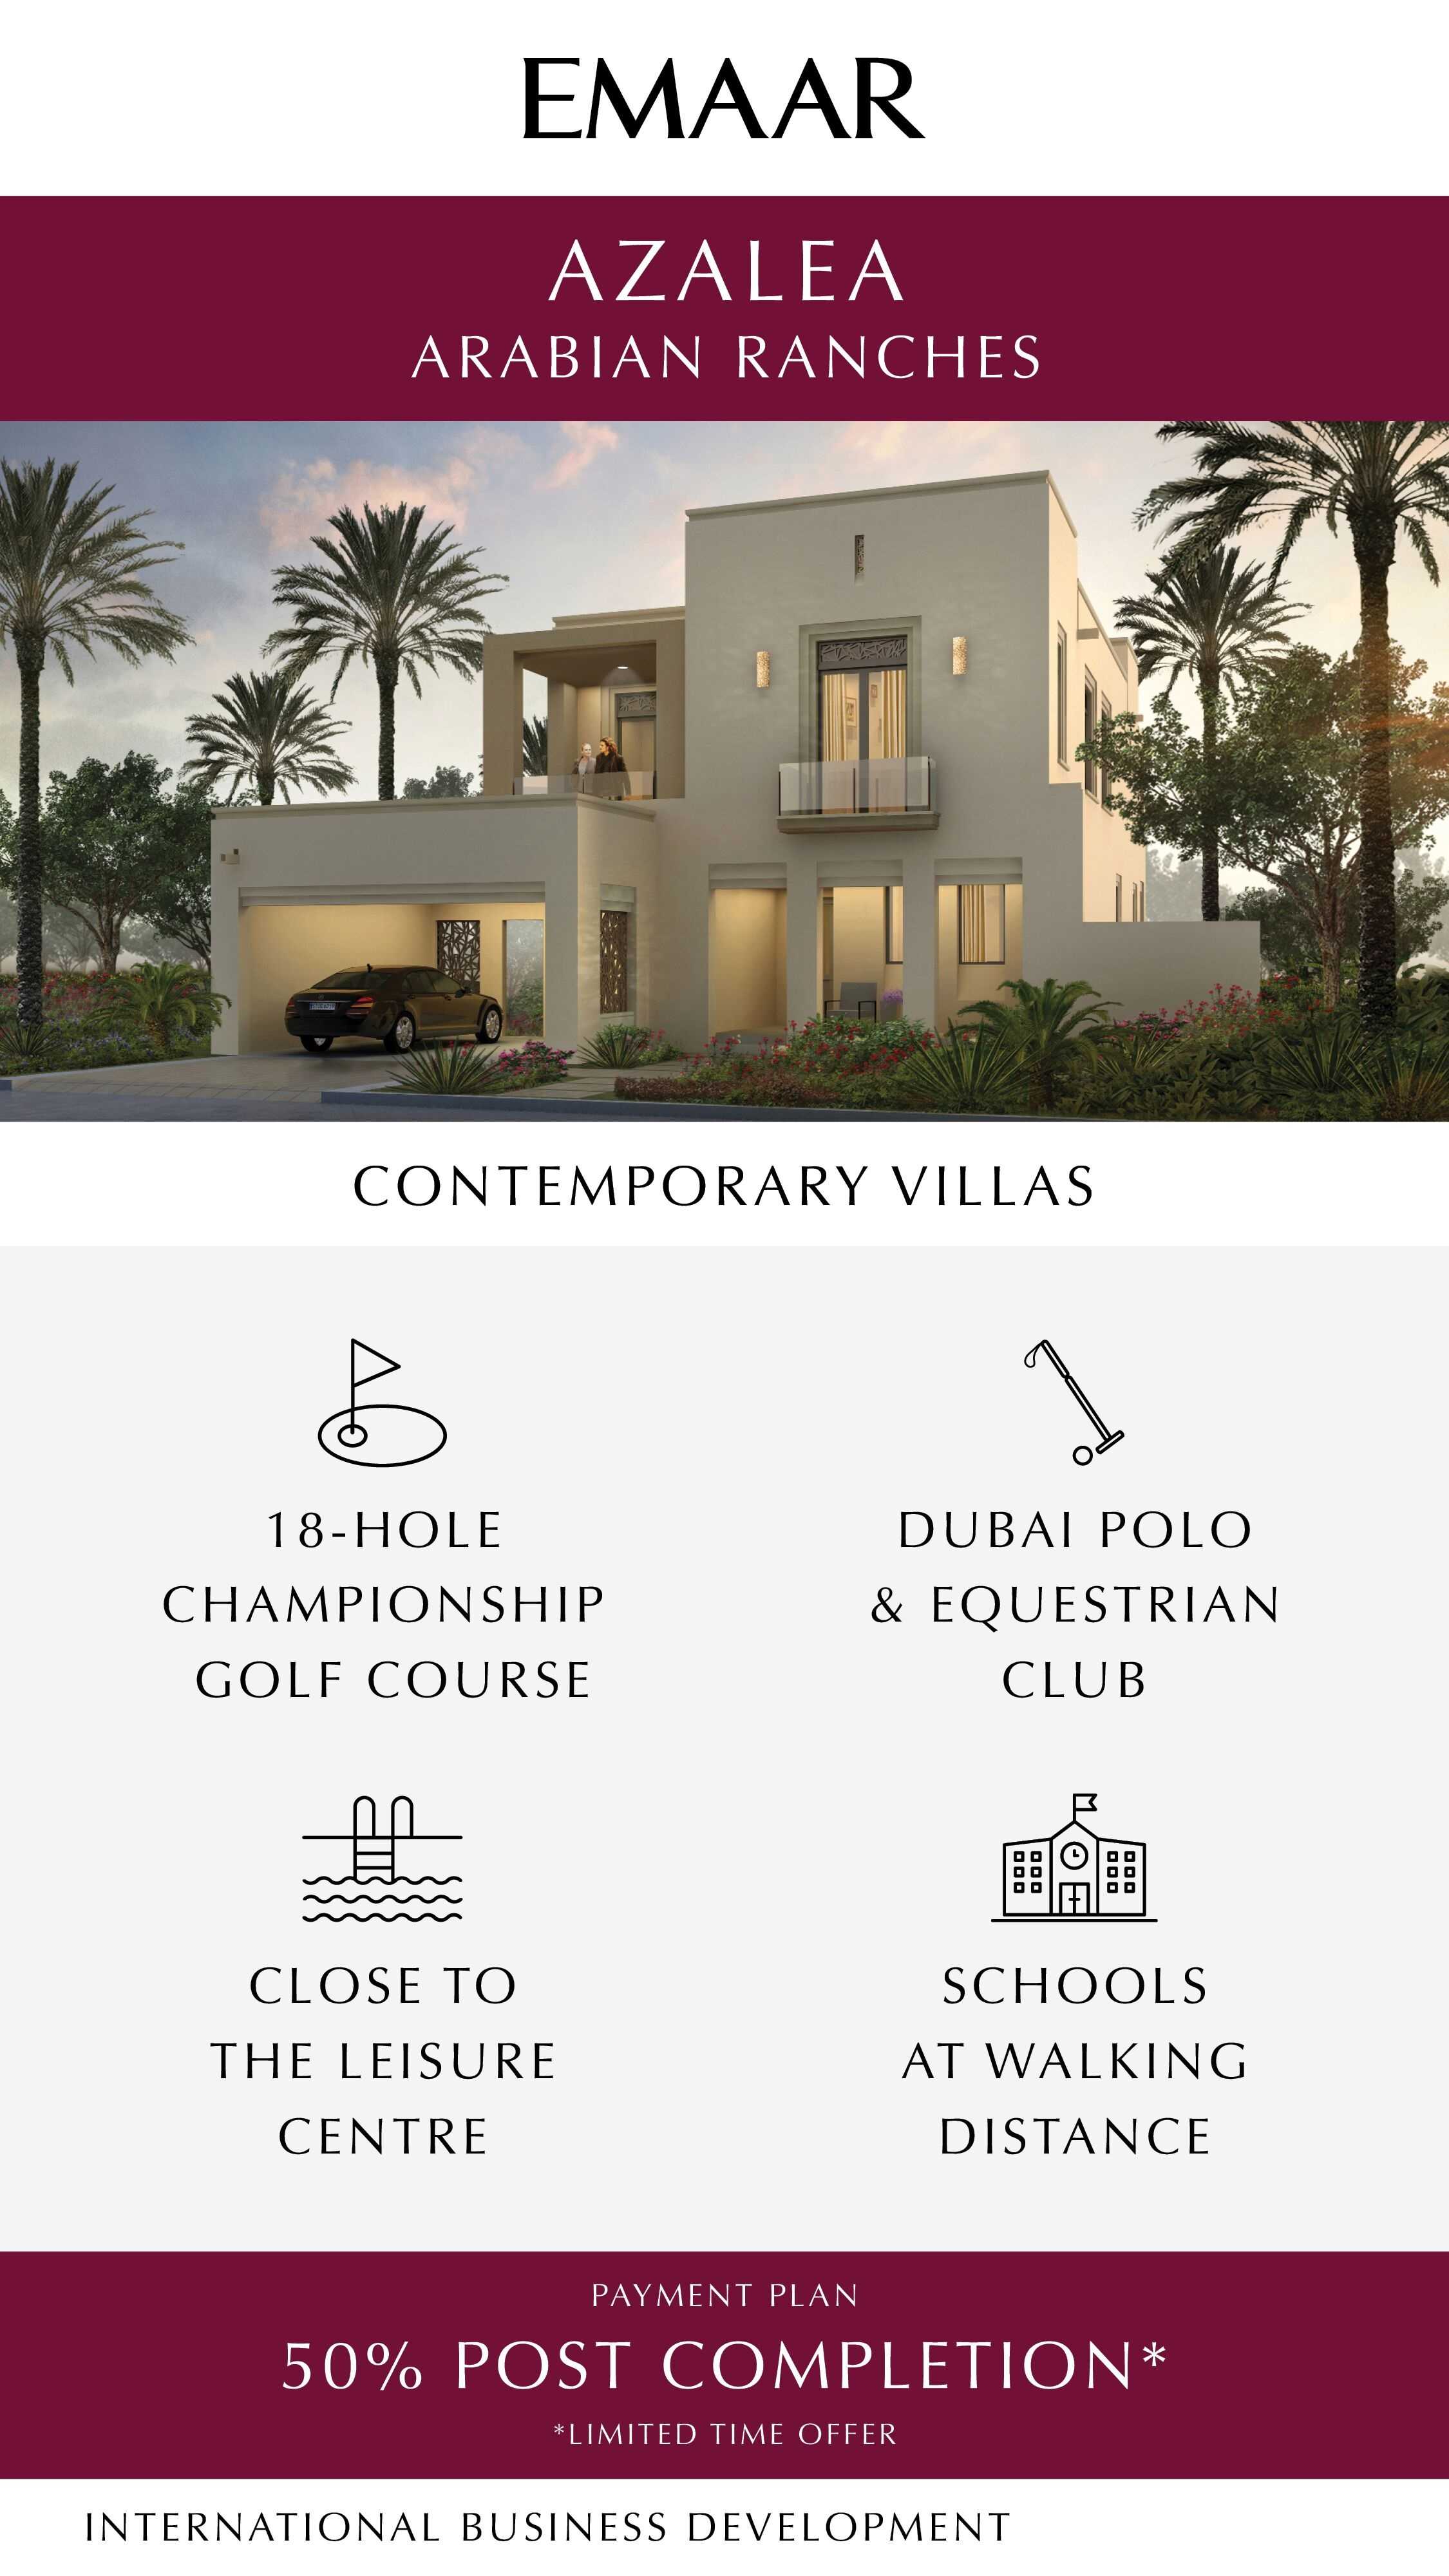 Azalea Villas by Emaar Properties at Arabian Ranches in Dubai